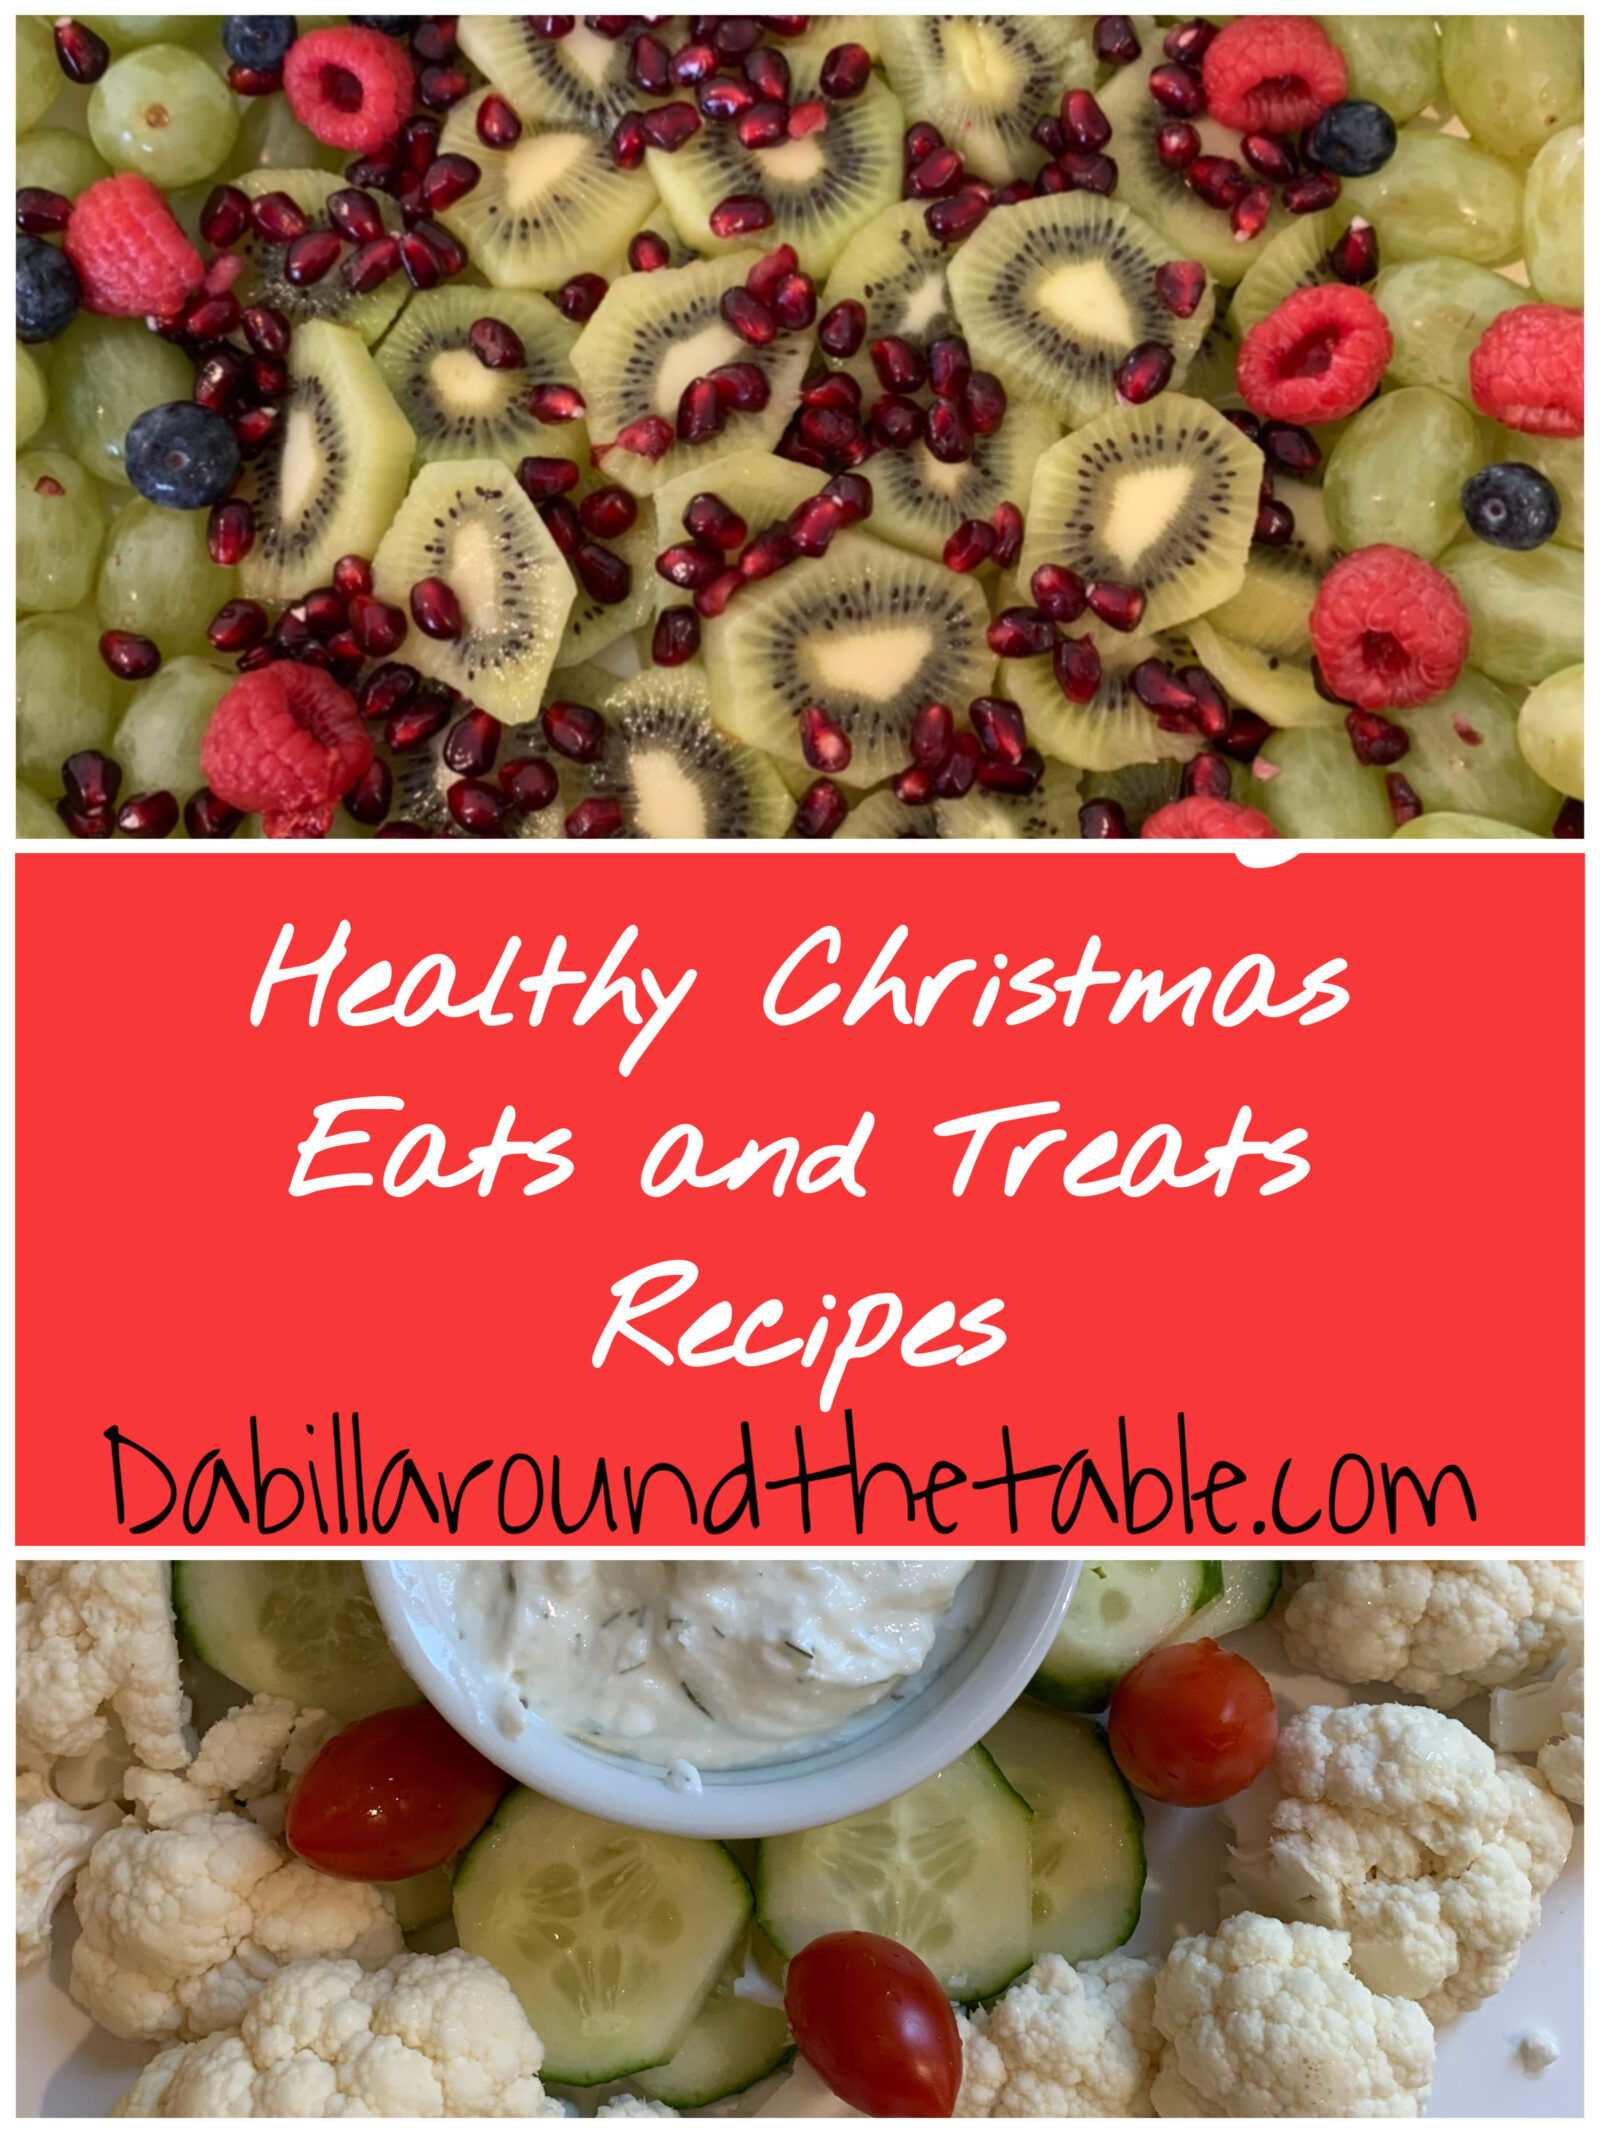 Healthy Christmas Eats and Treats to Share